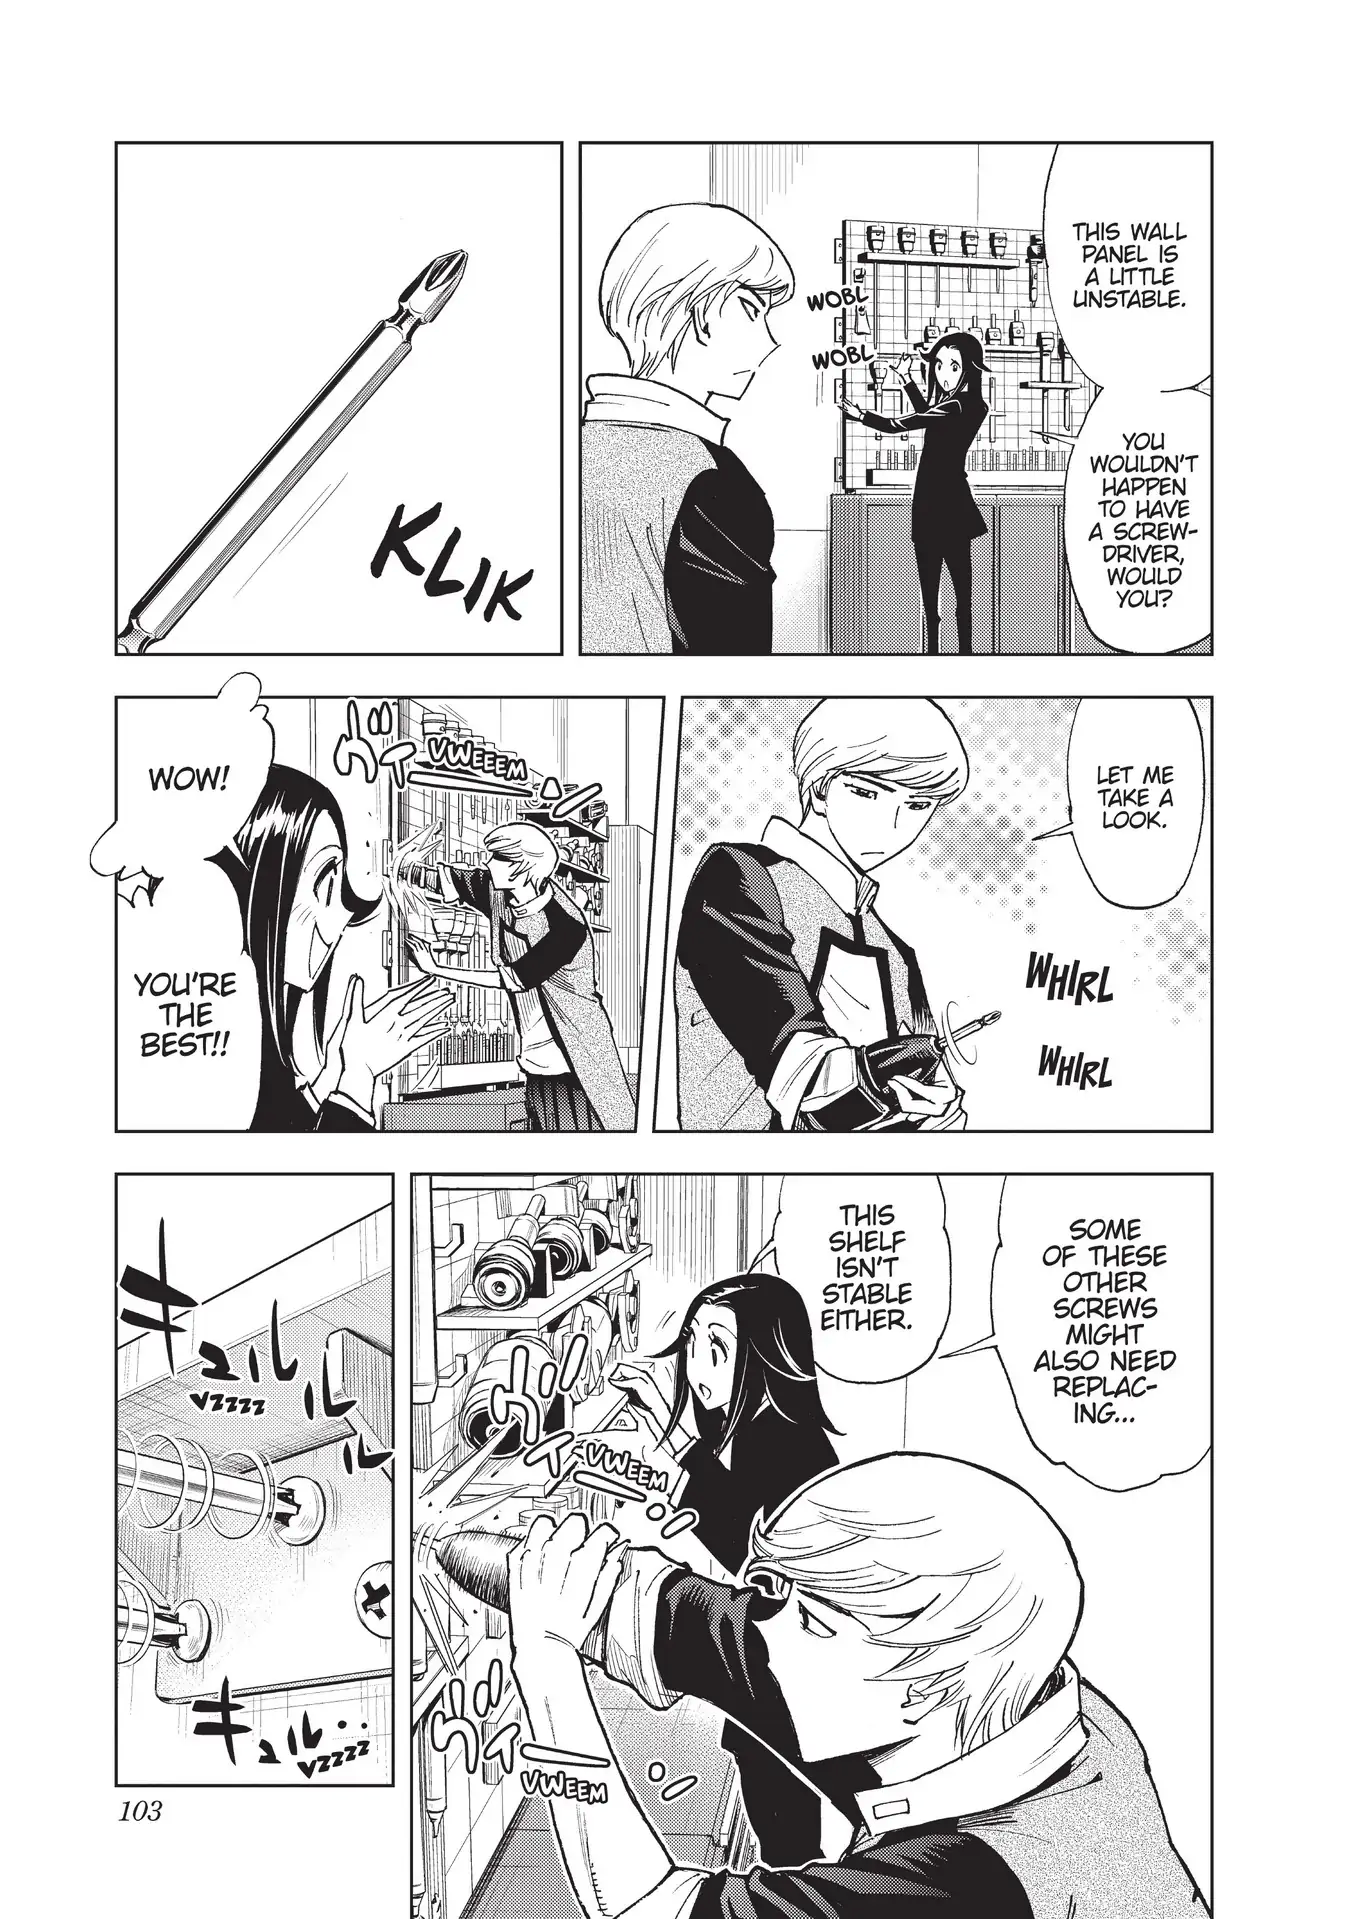 Kiruru Kill Me - chapter 27 - #3